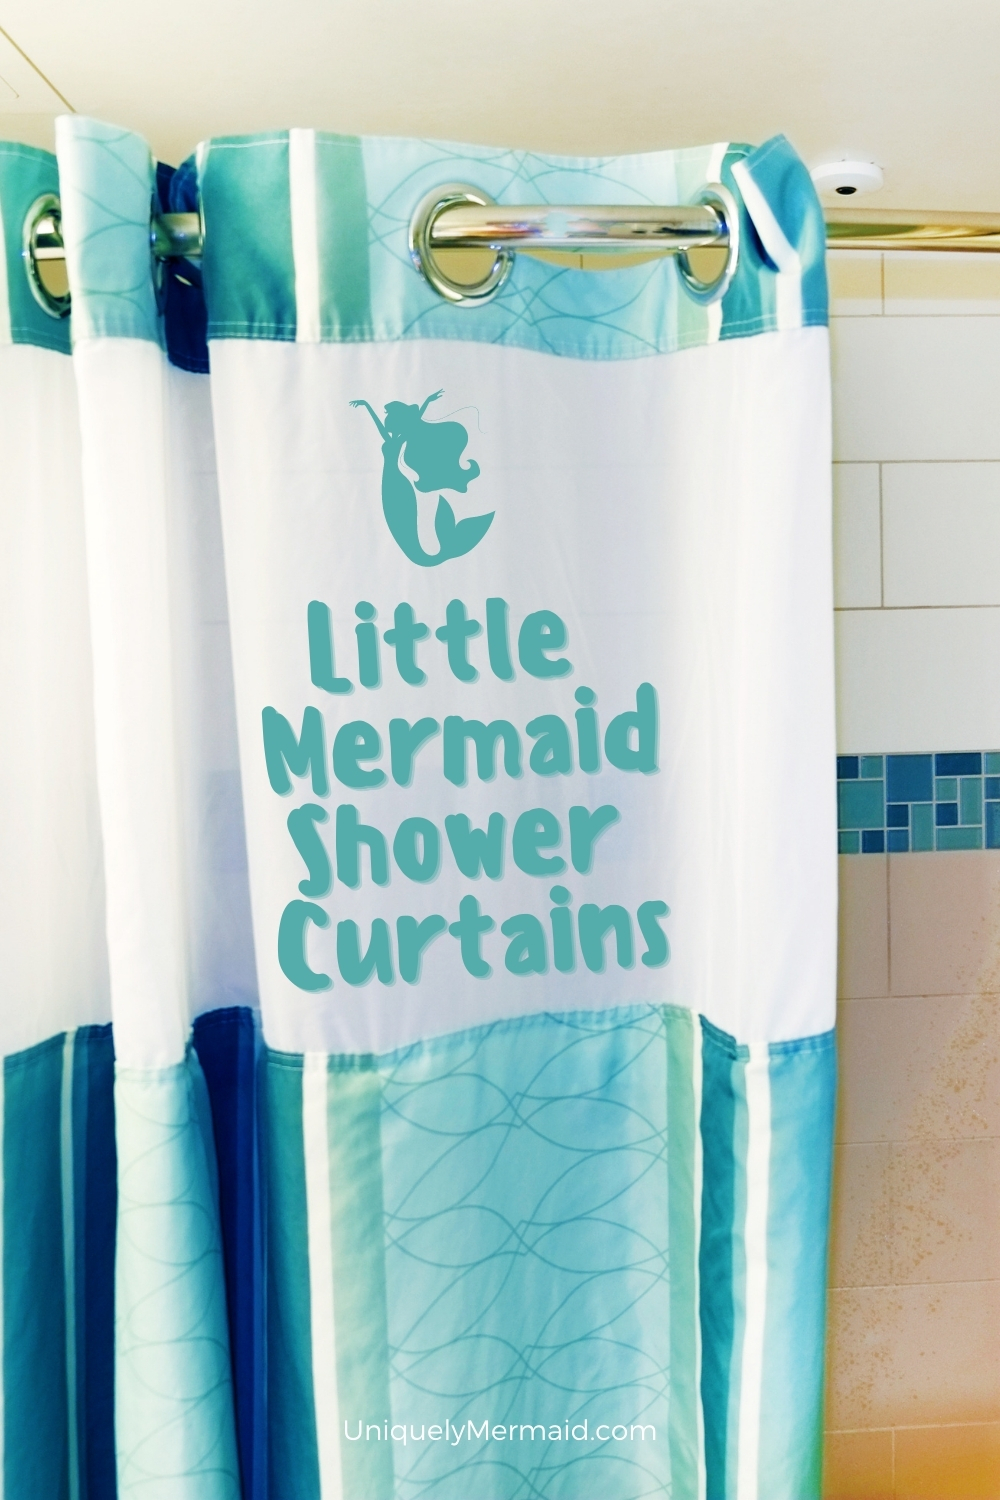 Little Mermaid Shower Curtains